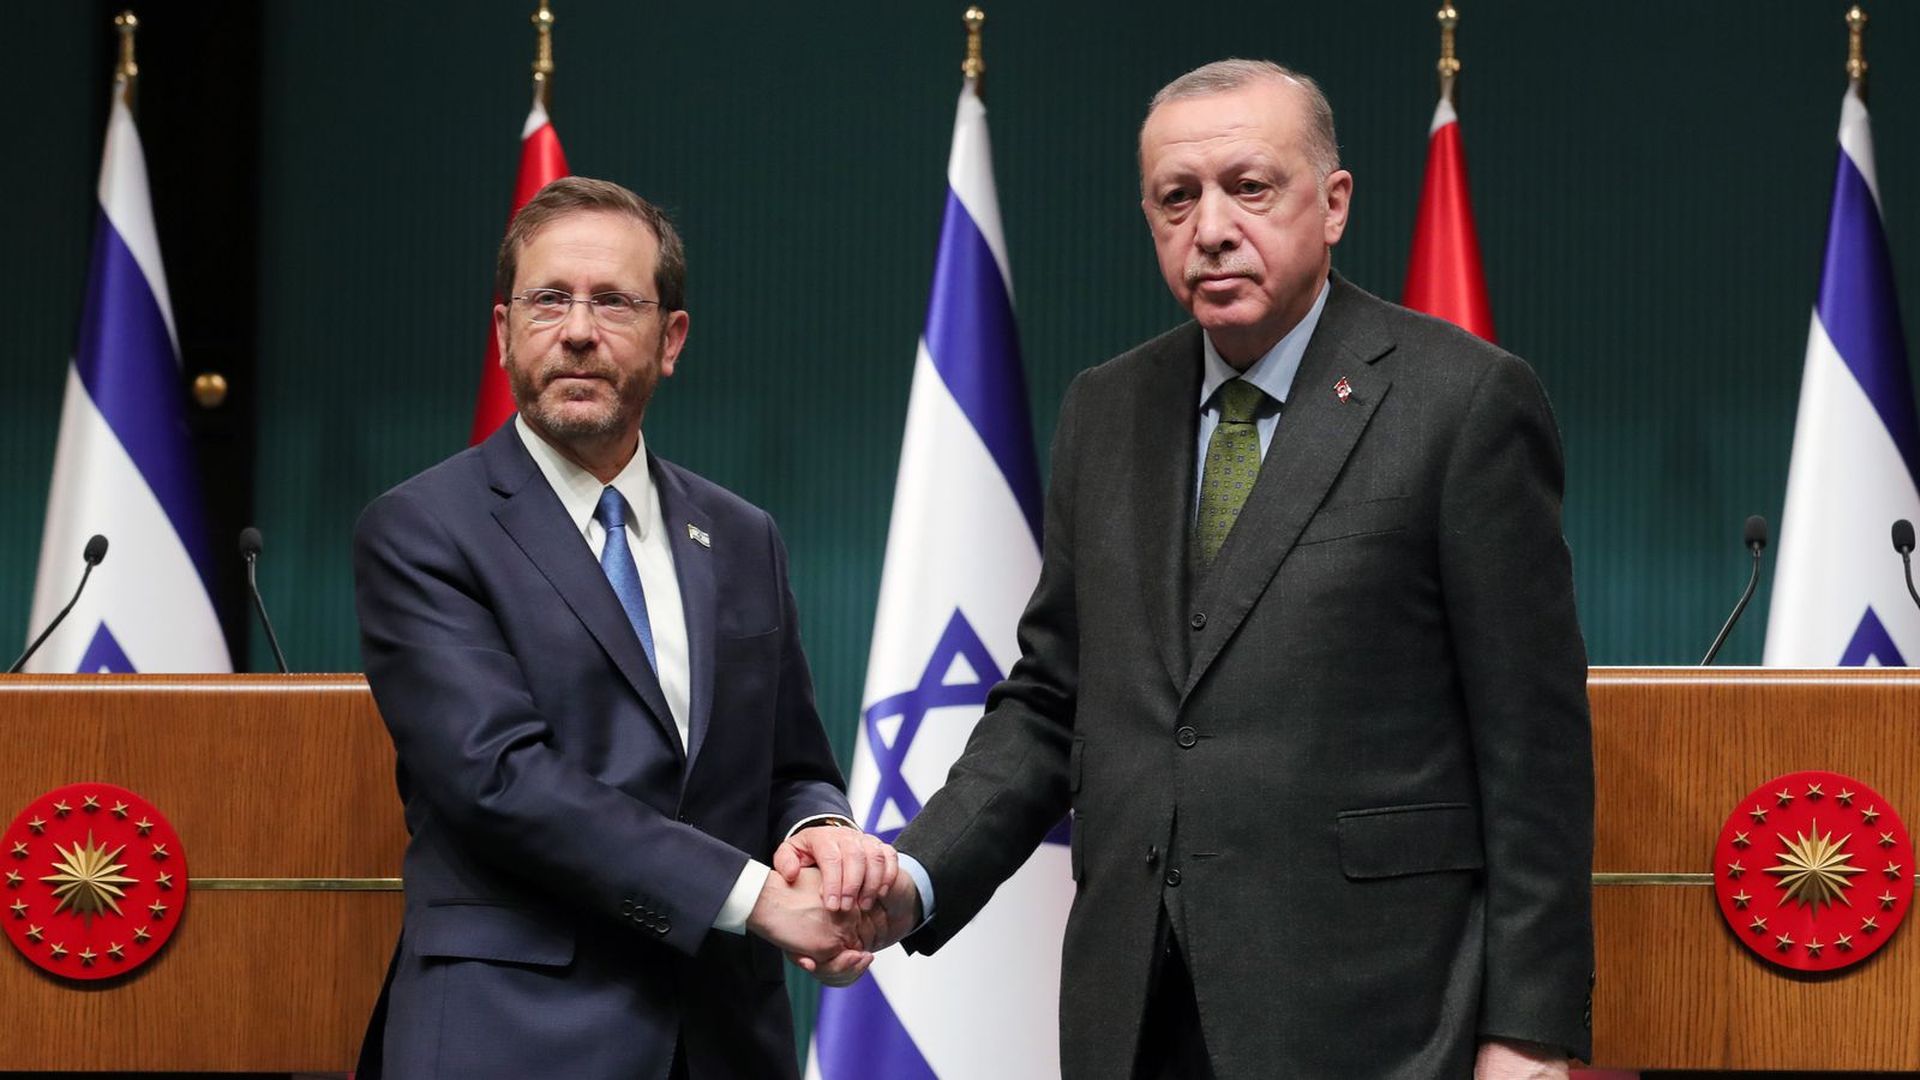 President Isaac Herzog of Israel (on left) and President Recep Tayyip Erdoğan of Turkey . Photo: Mustafa Kamaci/Anadolu Agency via Getty